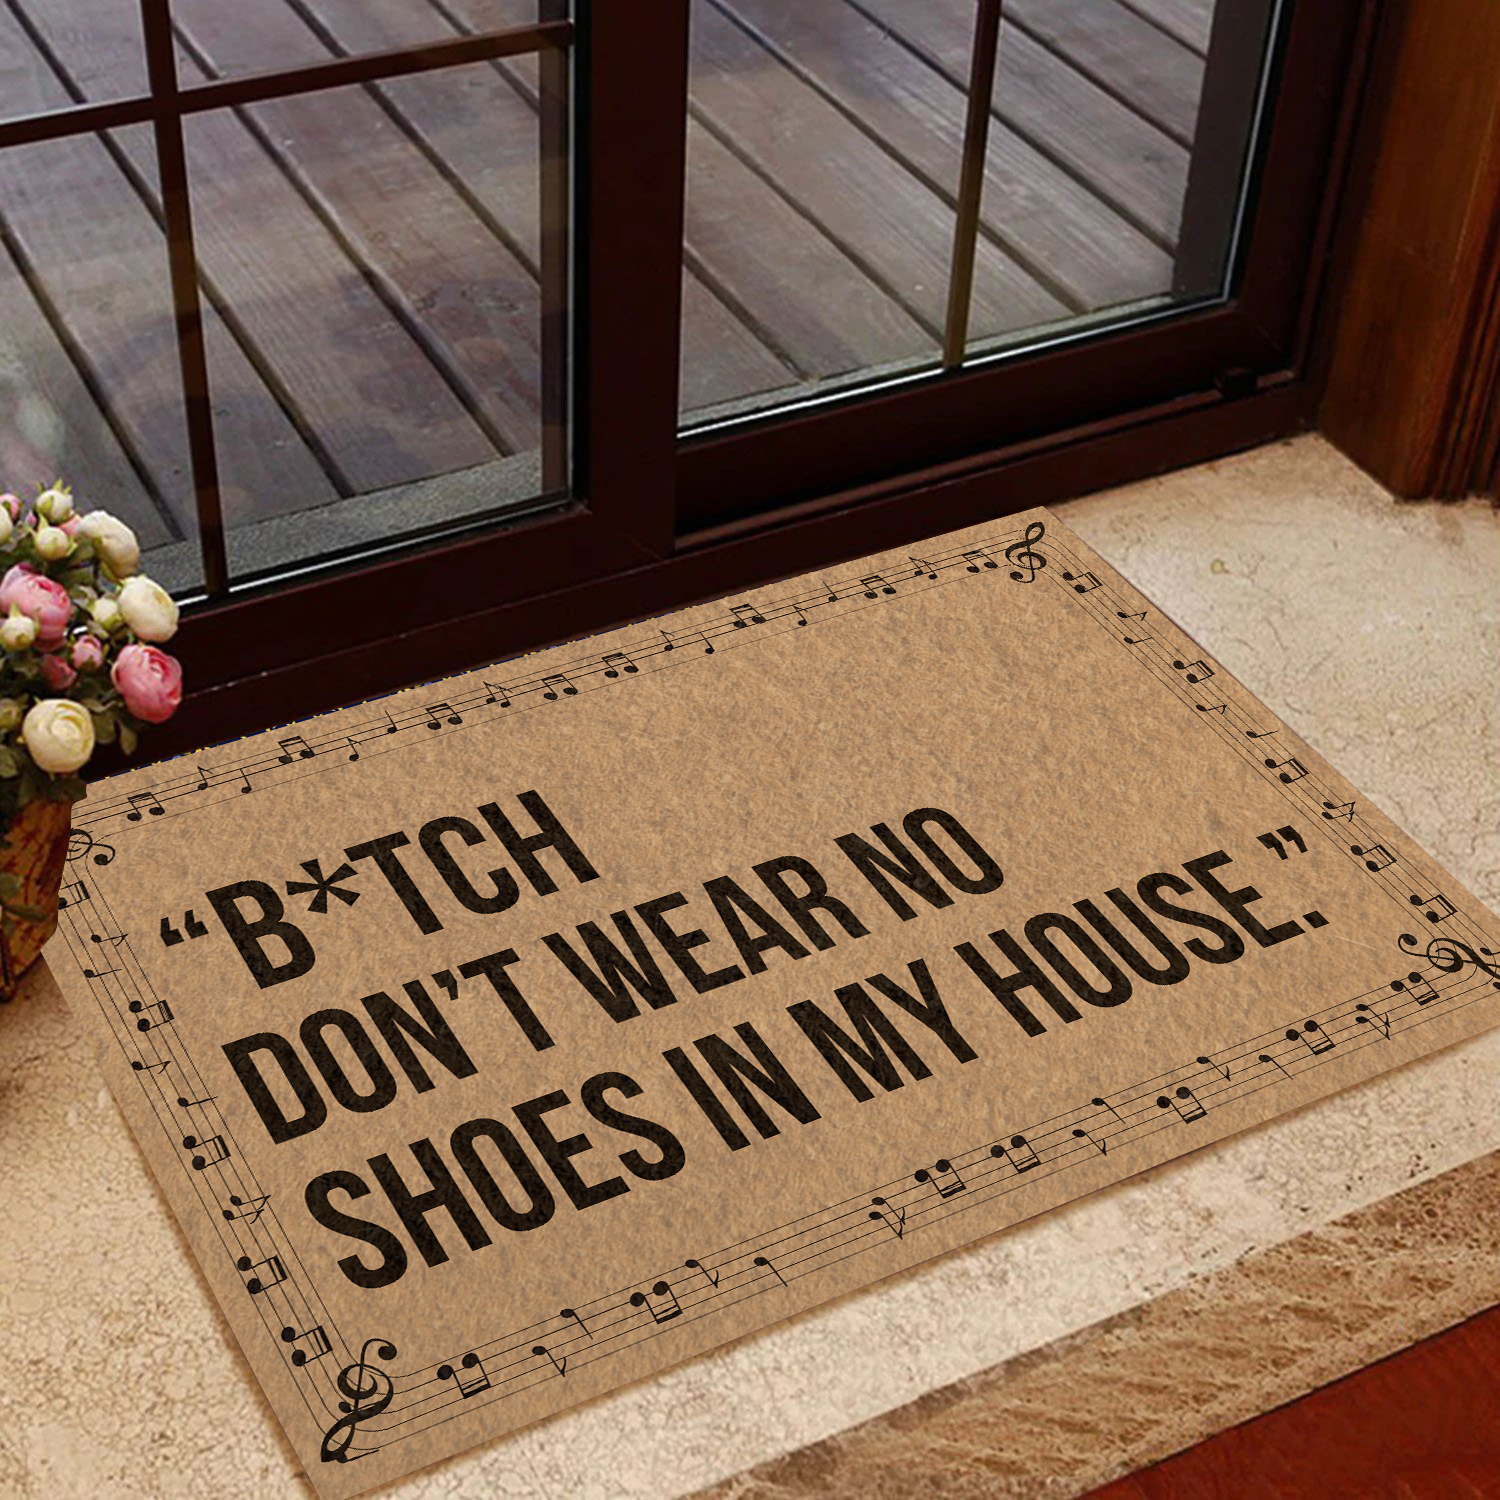 Wozoro doormat Bitch Don't Wear No Shoes In My House – Wozoro